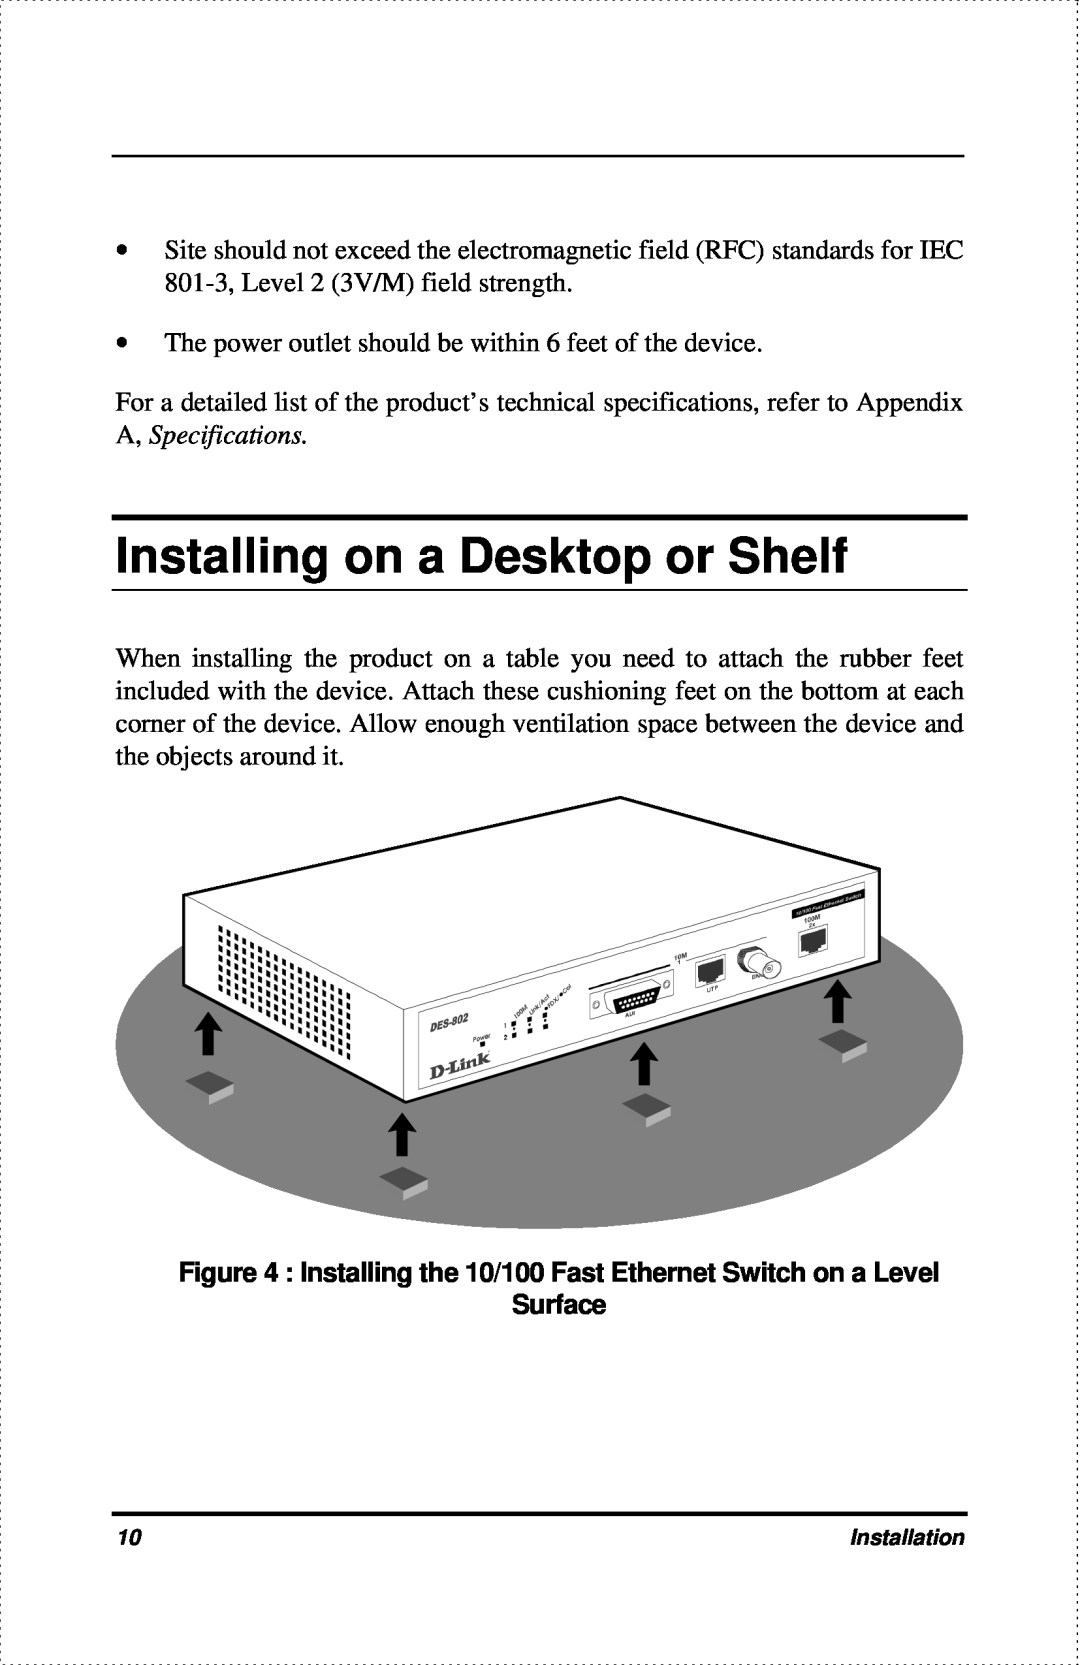 D-Link DES-802 manual Installing on a Desktop or Shelf, Installing the 10/100 Fast Ethernet Switch on a Level, Surface 